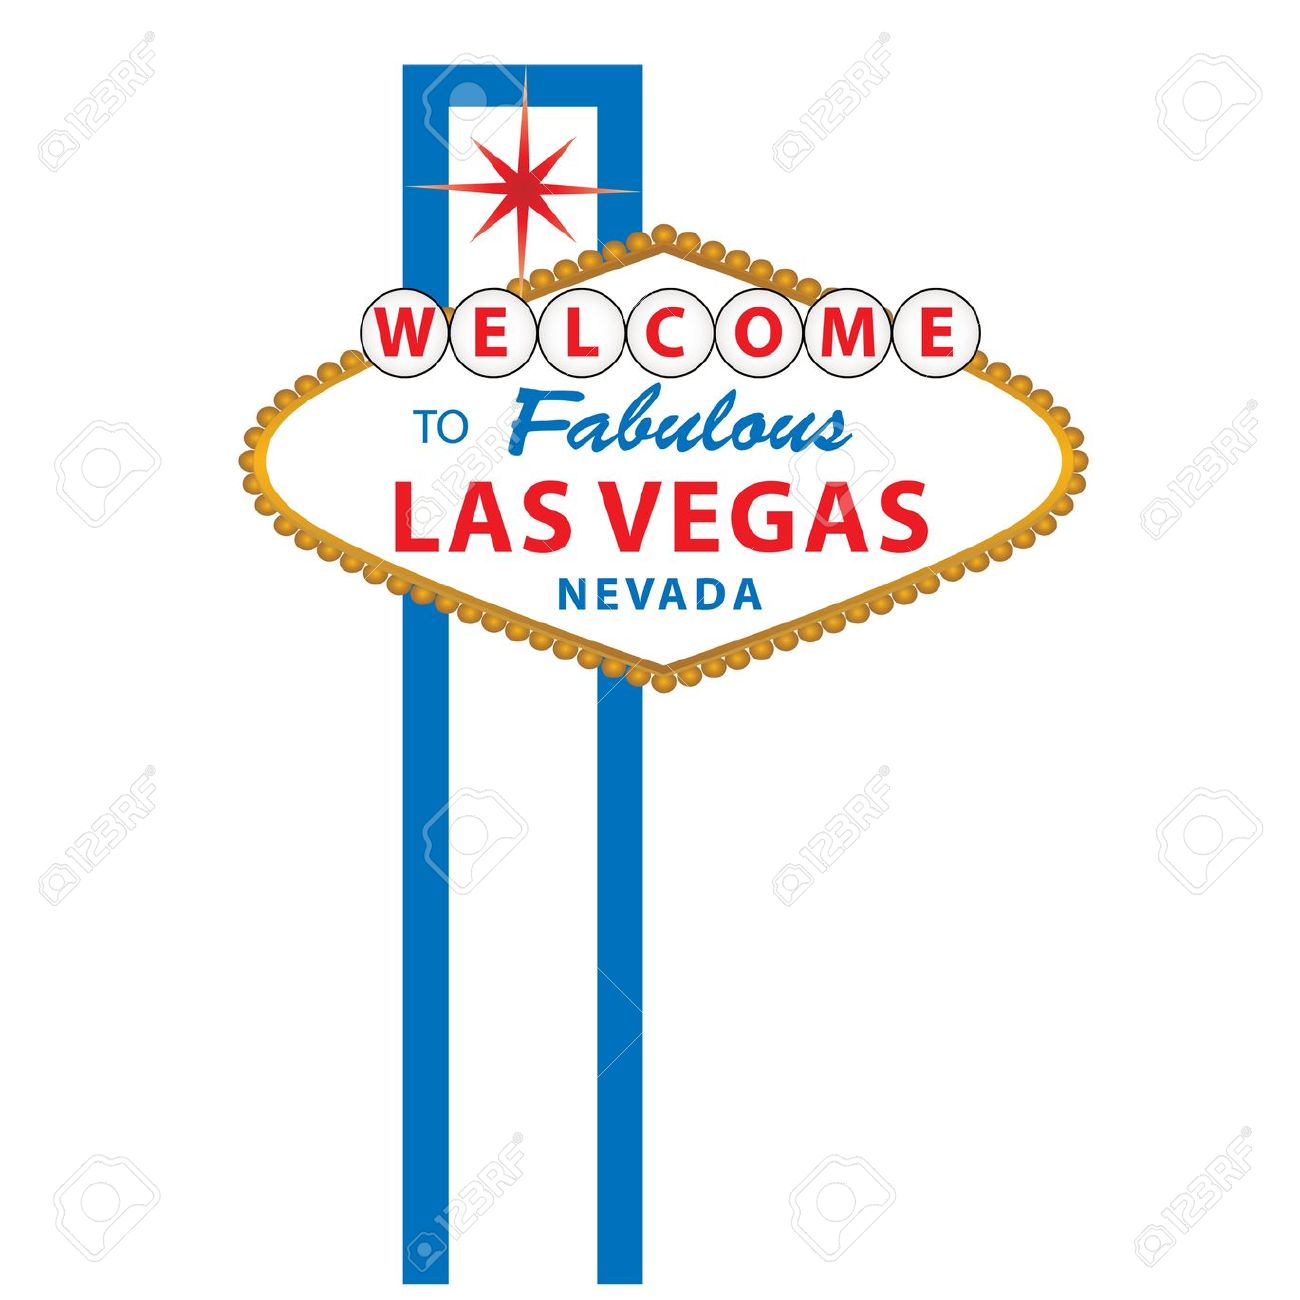 las vegas: Welcome to Fabulou - Vegas Clip Art